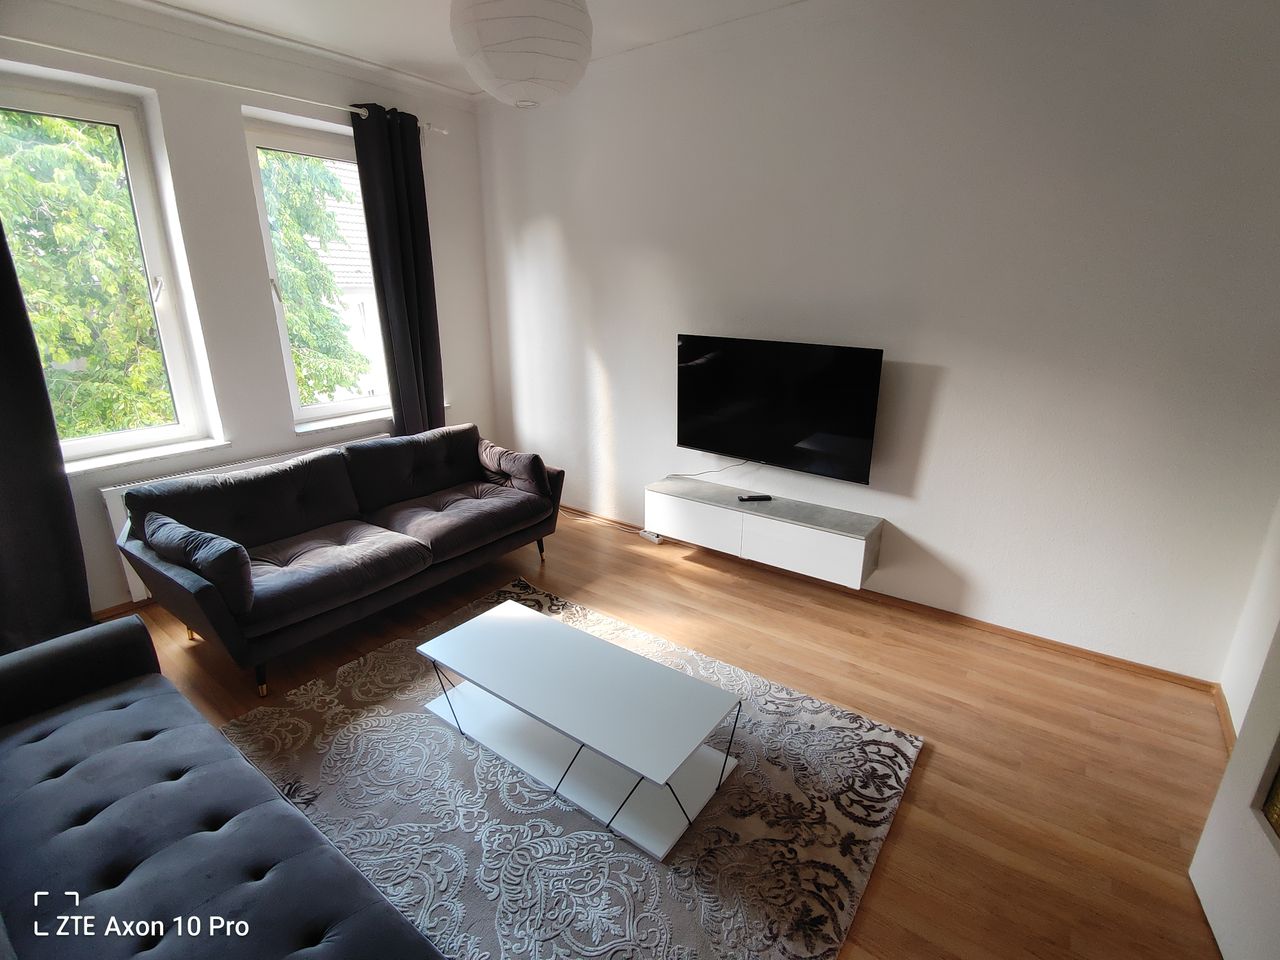 Modern design flat - Manager flat - located in Essen-West